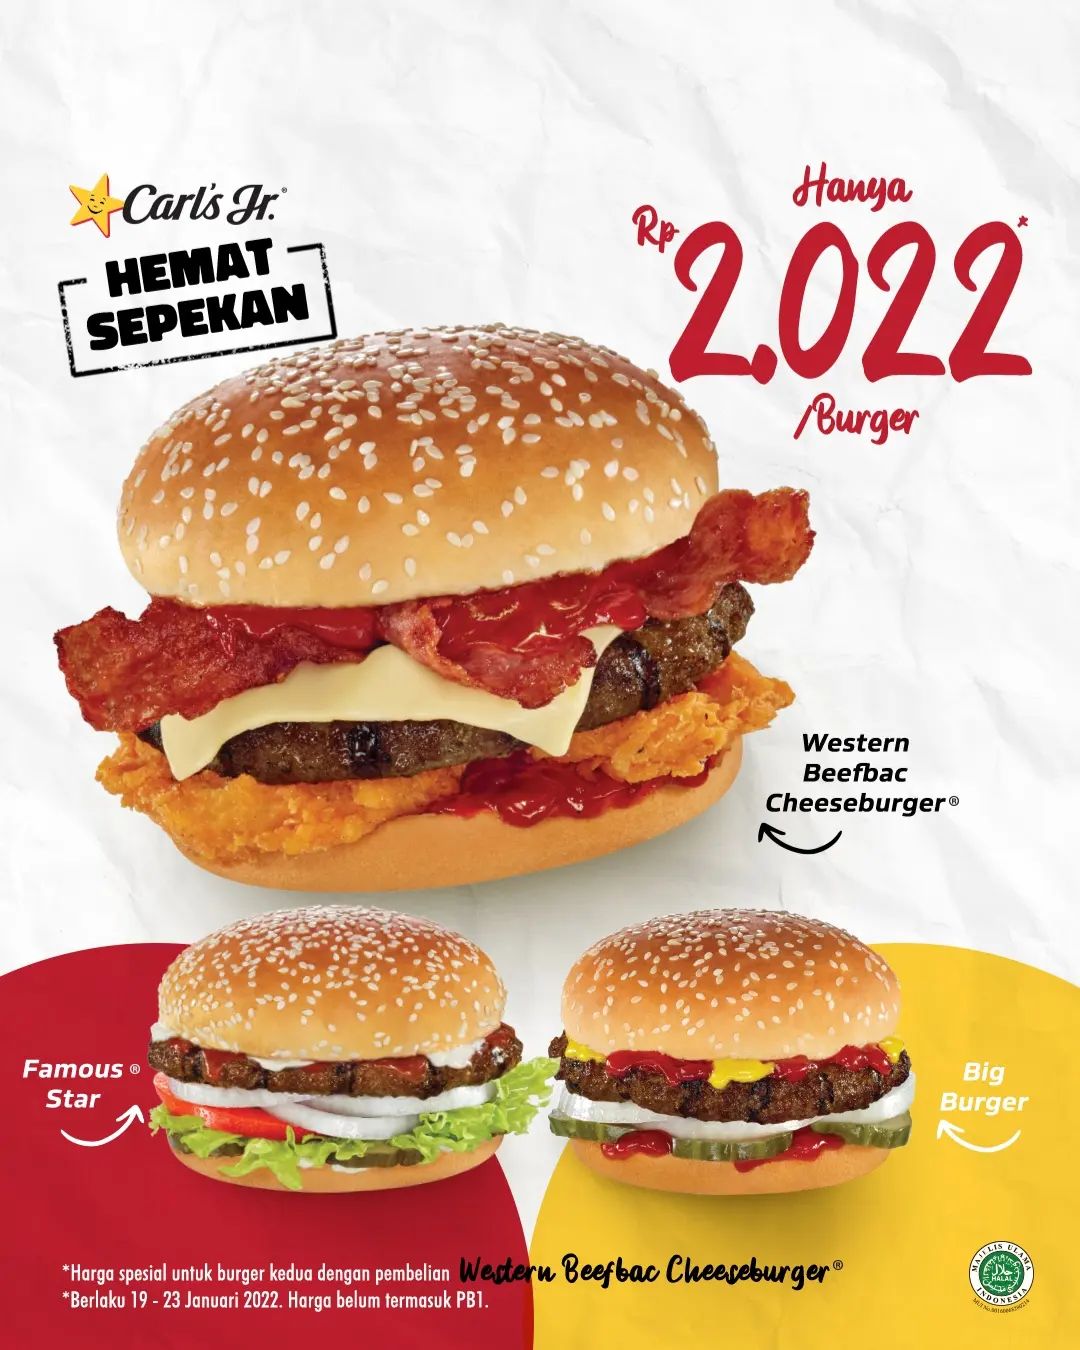 Hanya Rp. 2.022 per burger